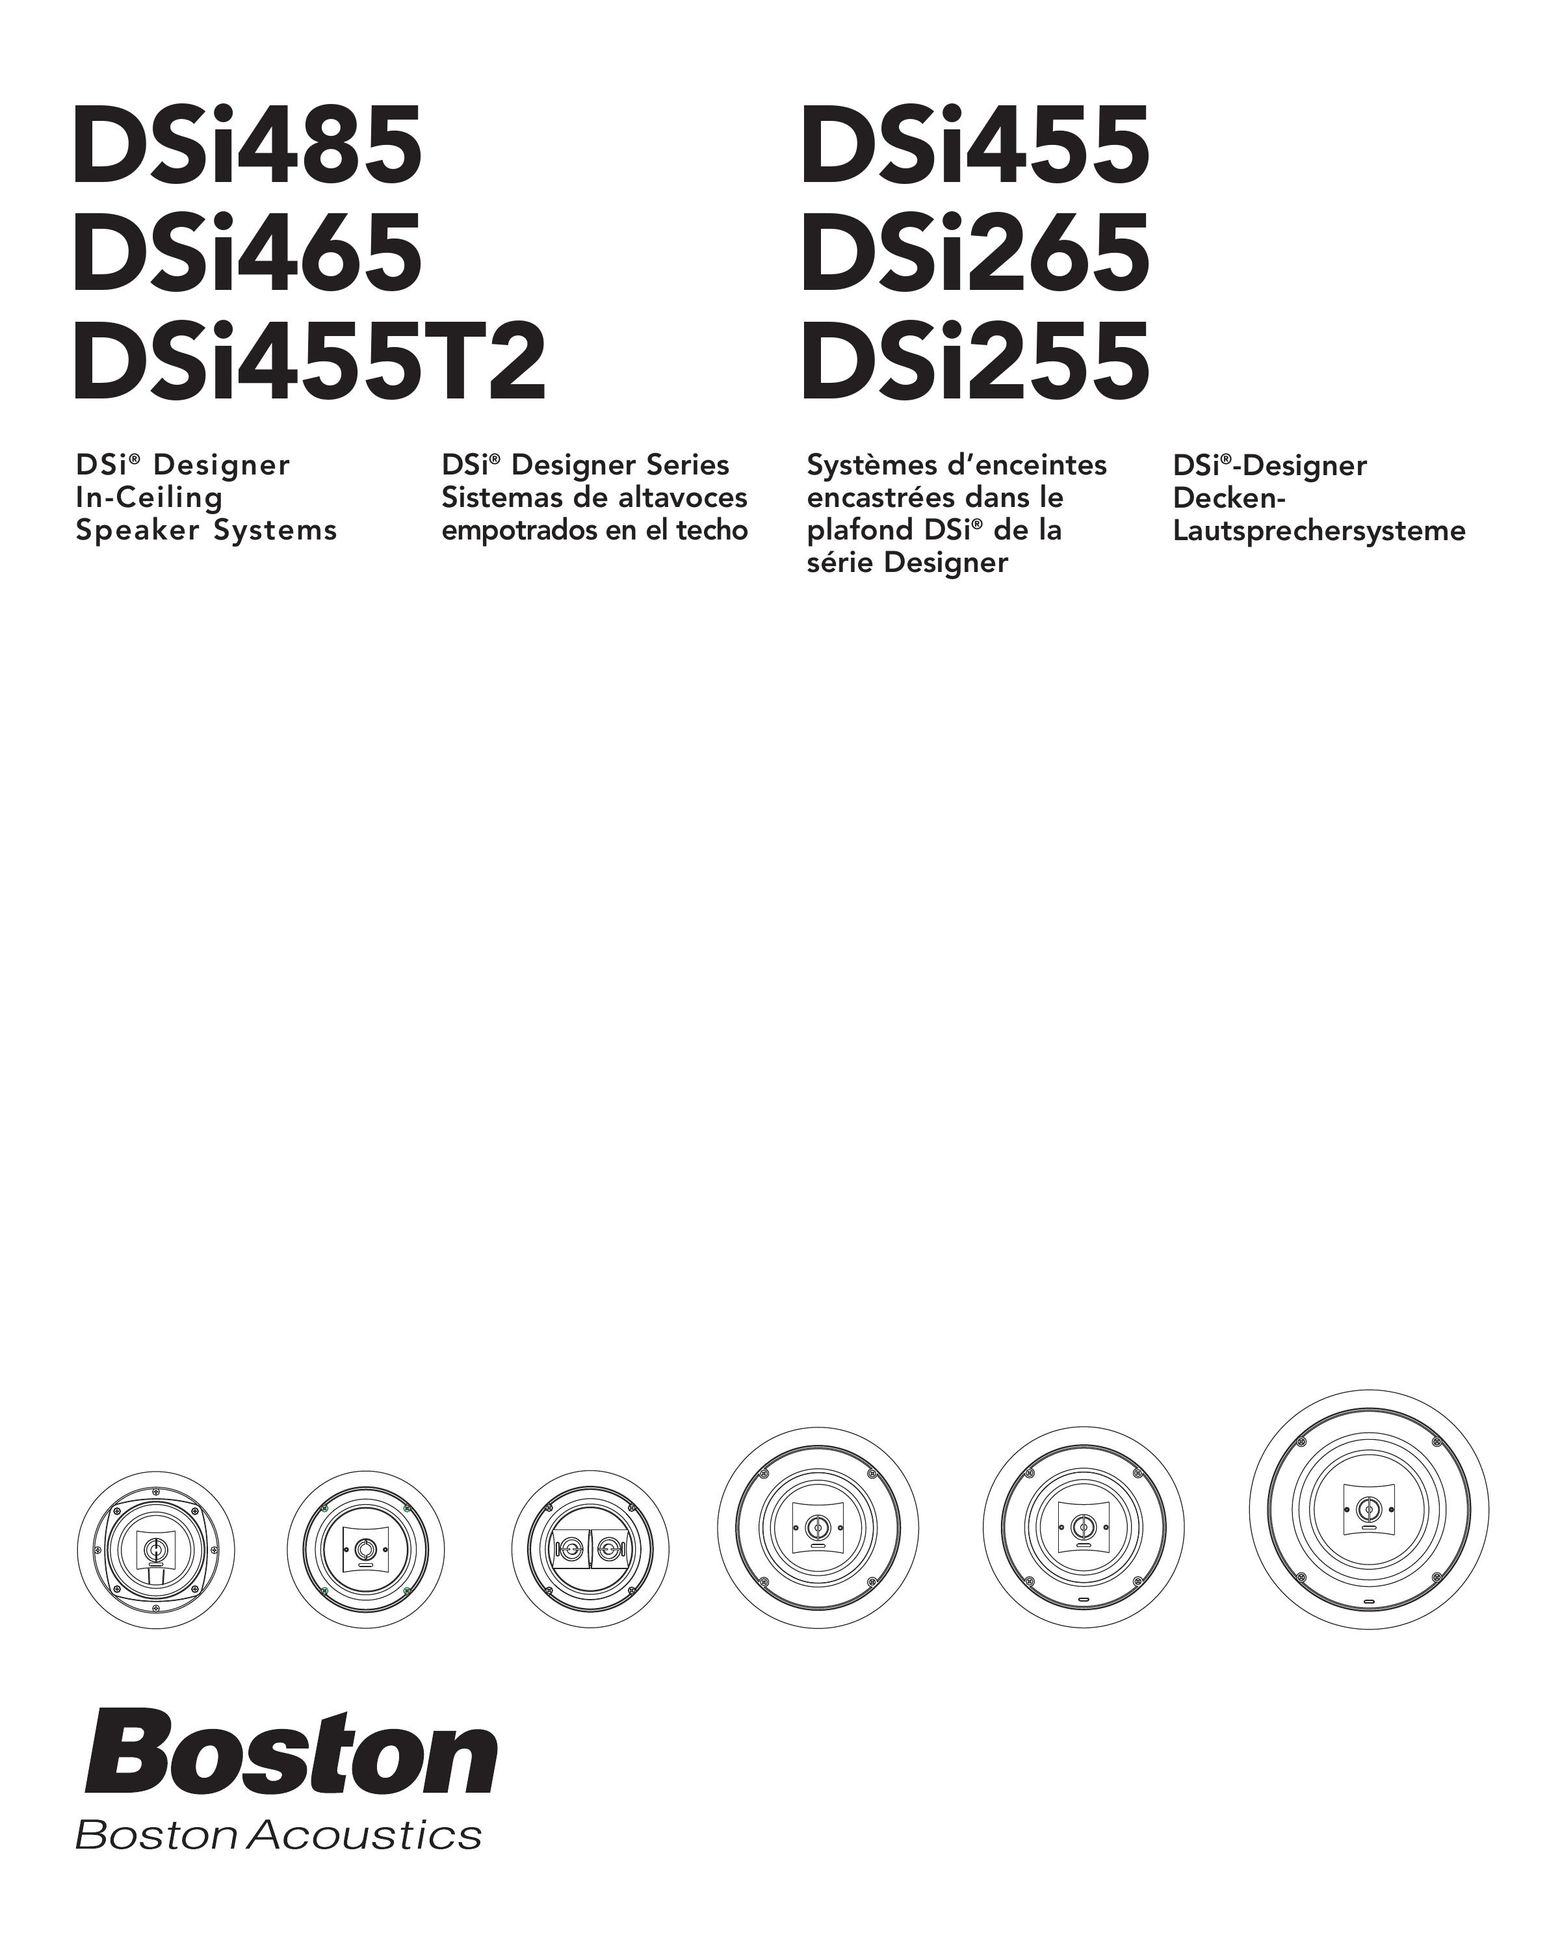 Boston Acoustics DSI265 Computer Drive User Manual